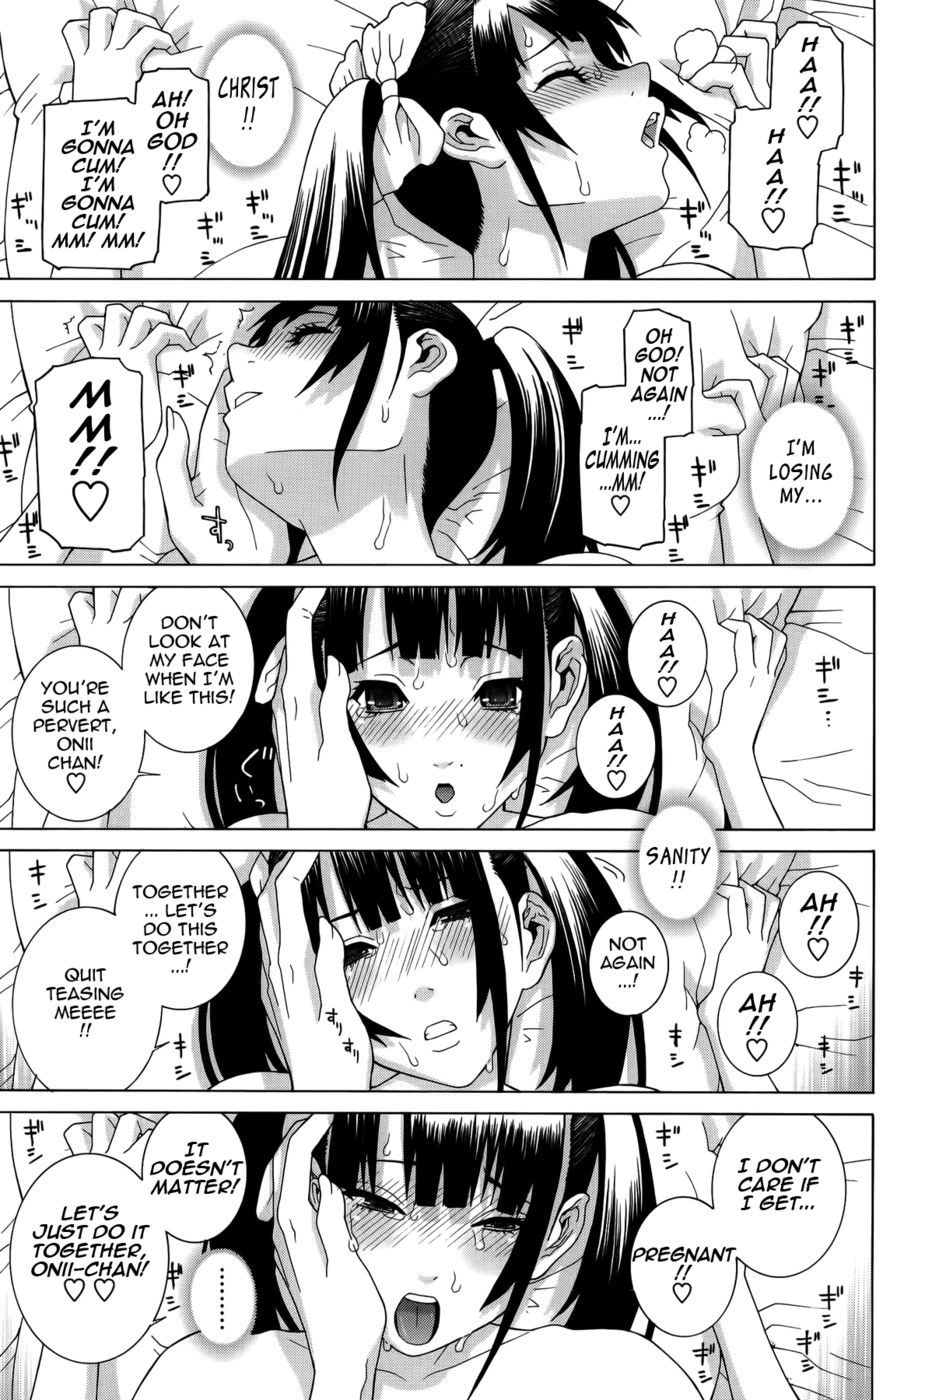 Hentai Manga Comic-Little Stepsister Band-aid-Read-13